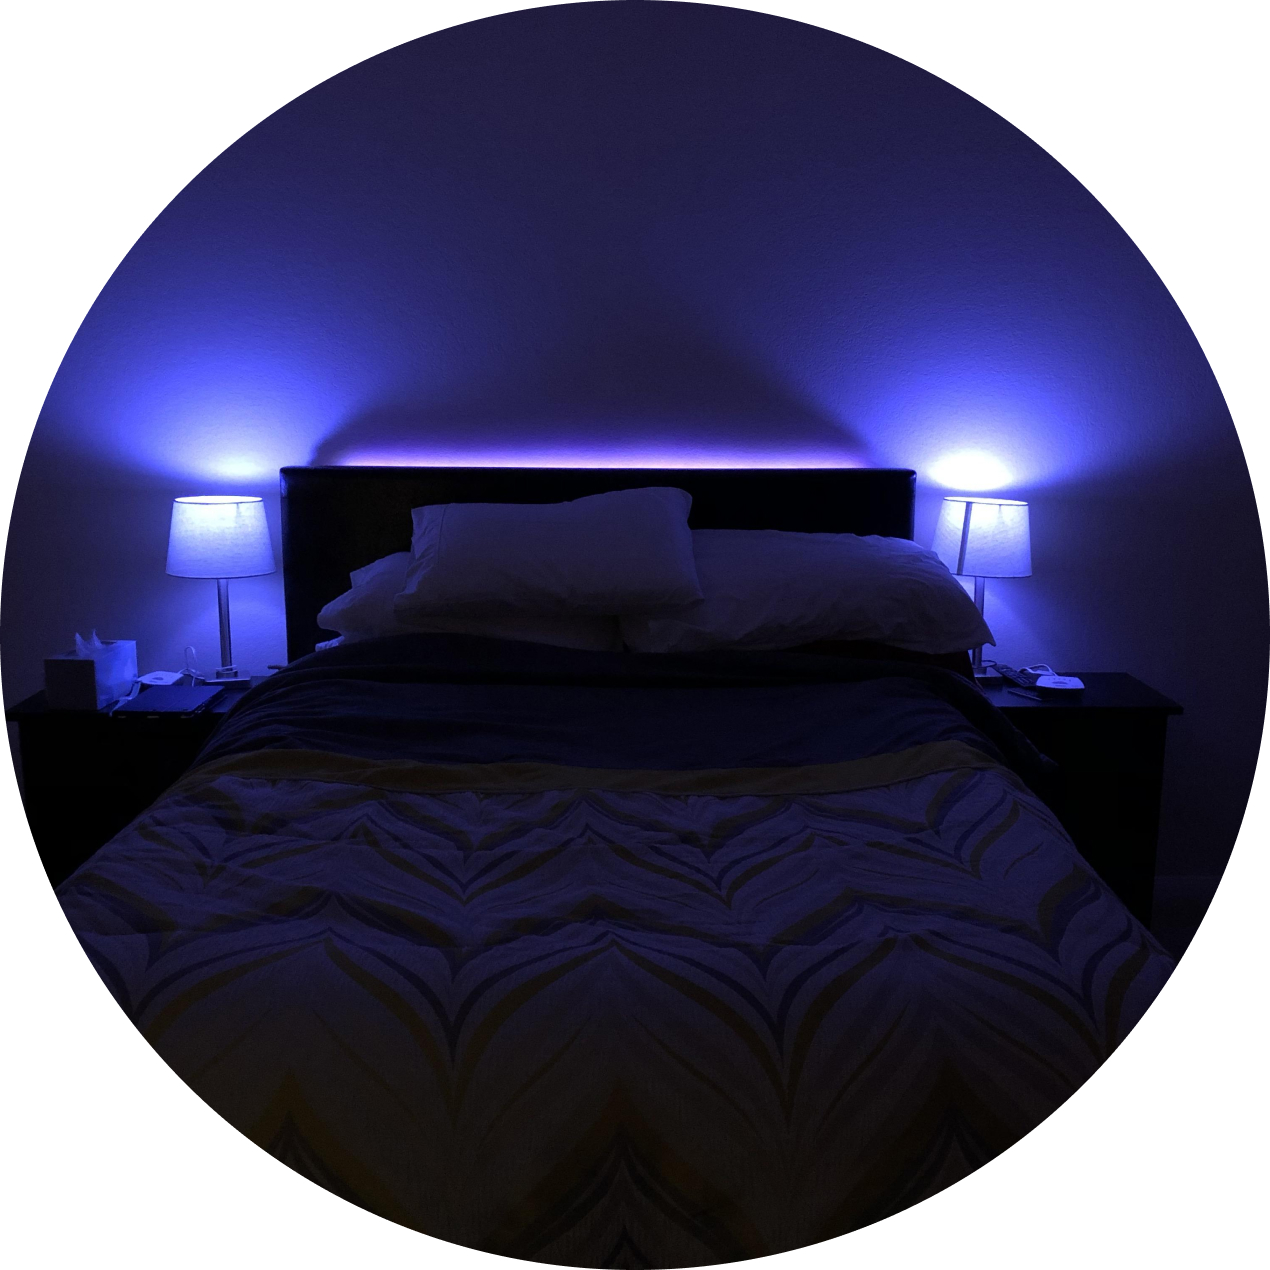 A bedroom lit with smart lighting